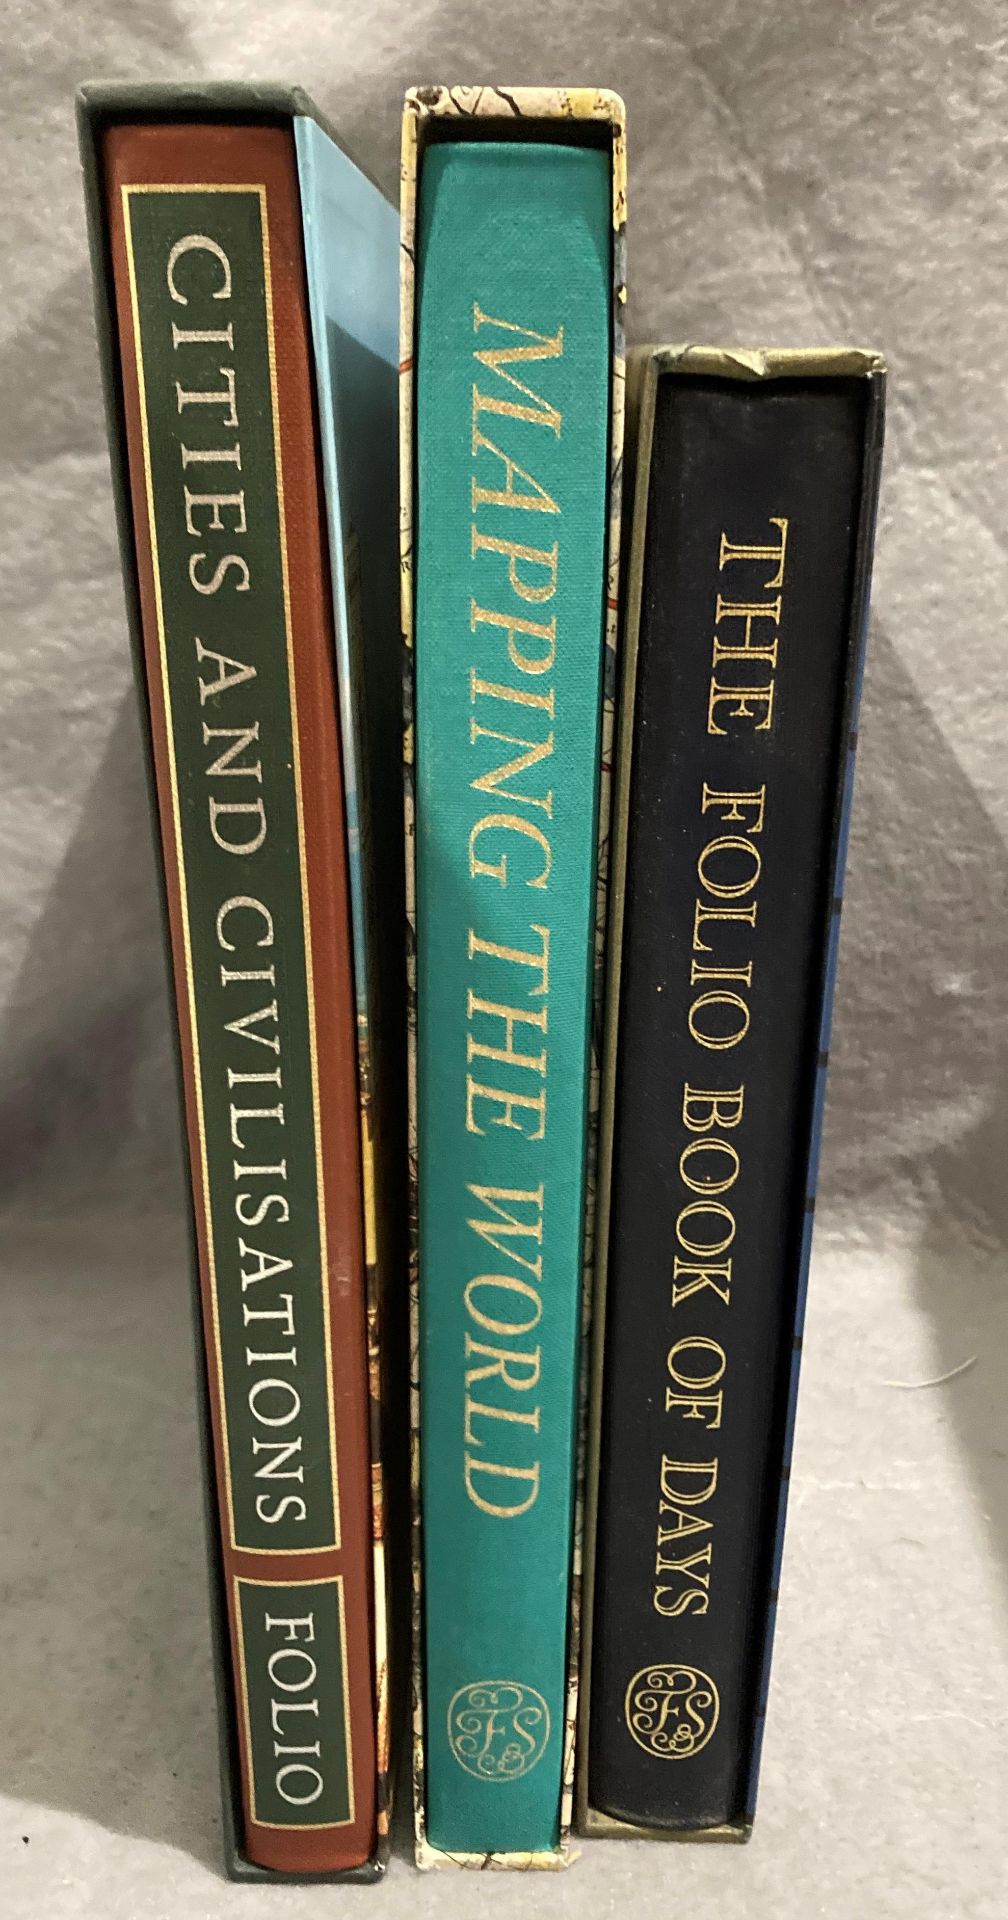 Folio Society - Three books in cases 'The Folio Book of Days',